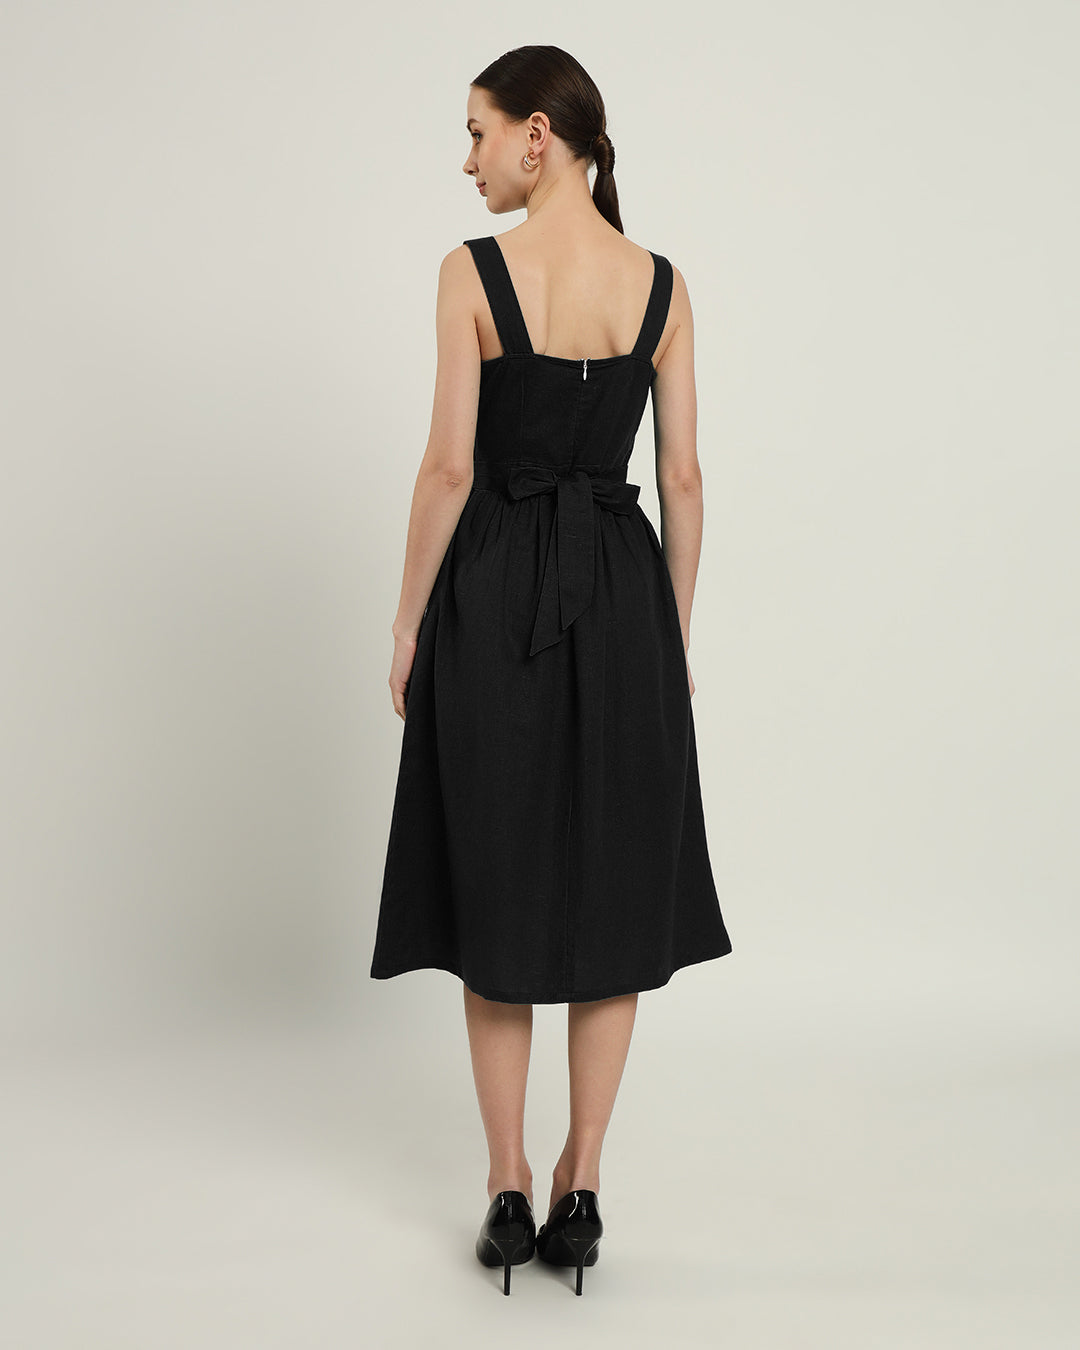 The Mihara Noir Cotton Dress